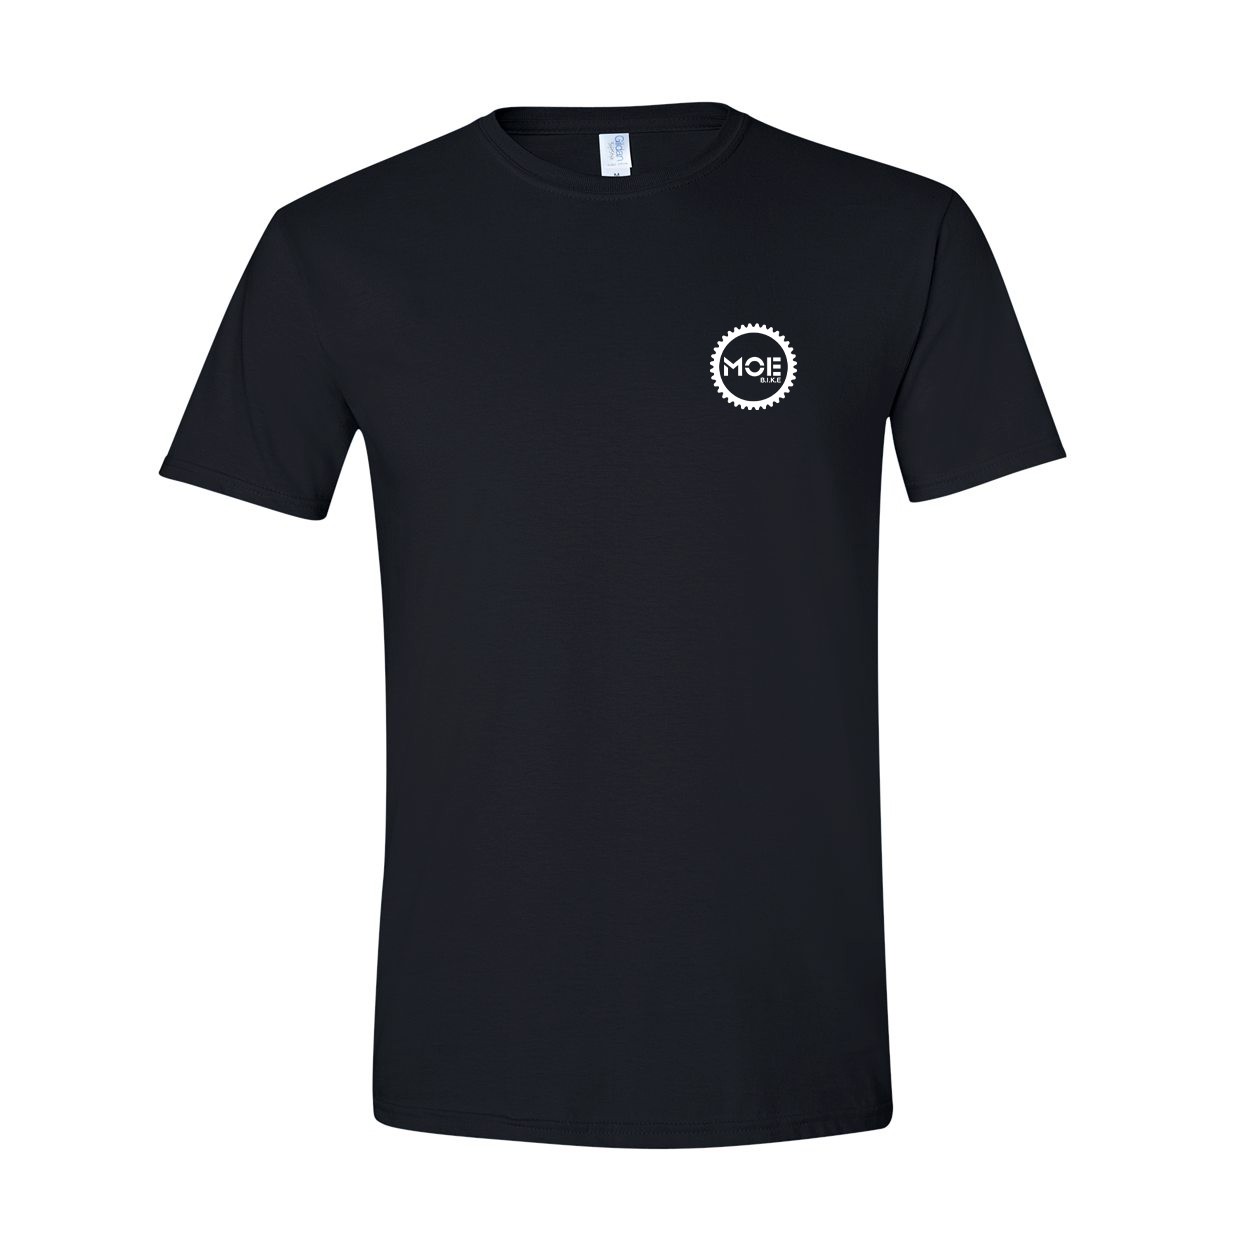 Moe Bike Night Out T-Shirt Black (White Logo)